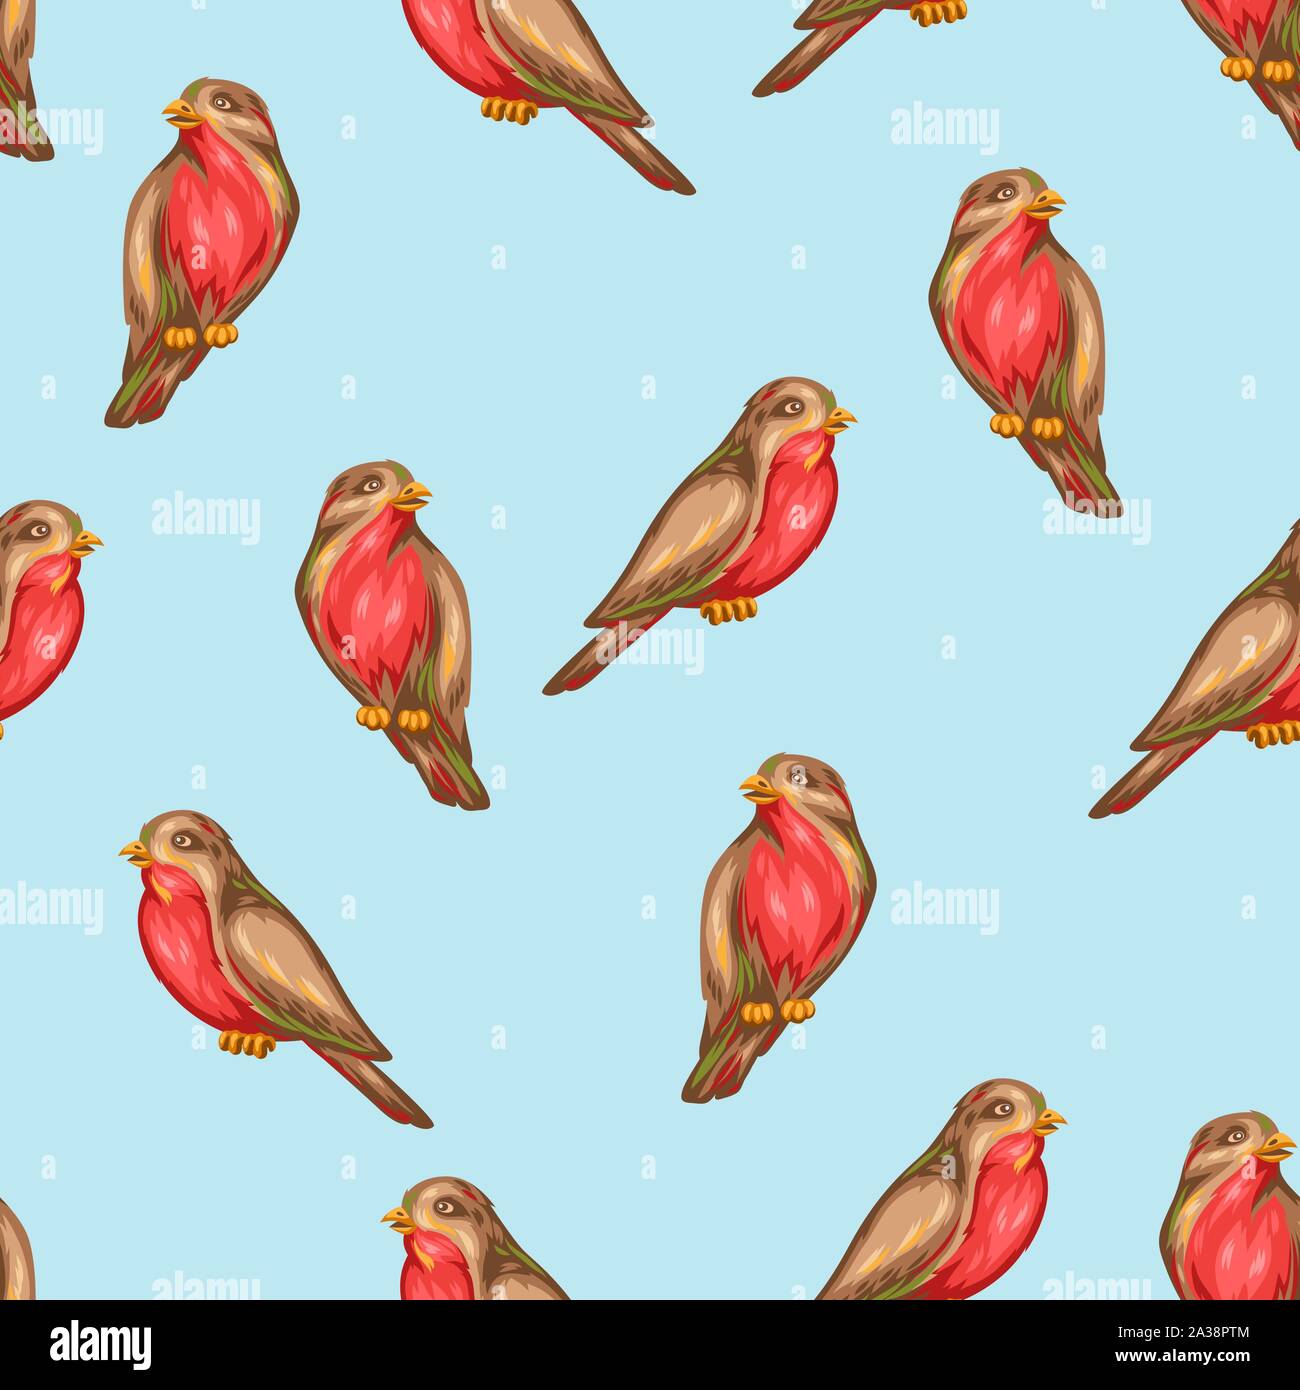 Seamless pattern with bullfinch birds. Stock Vector